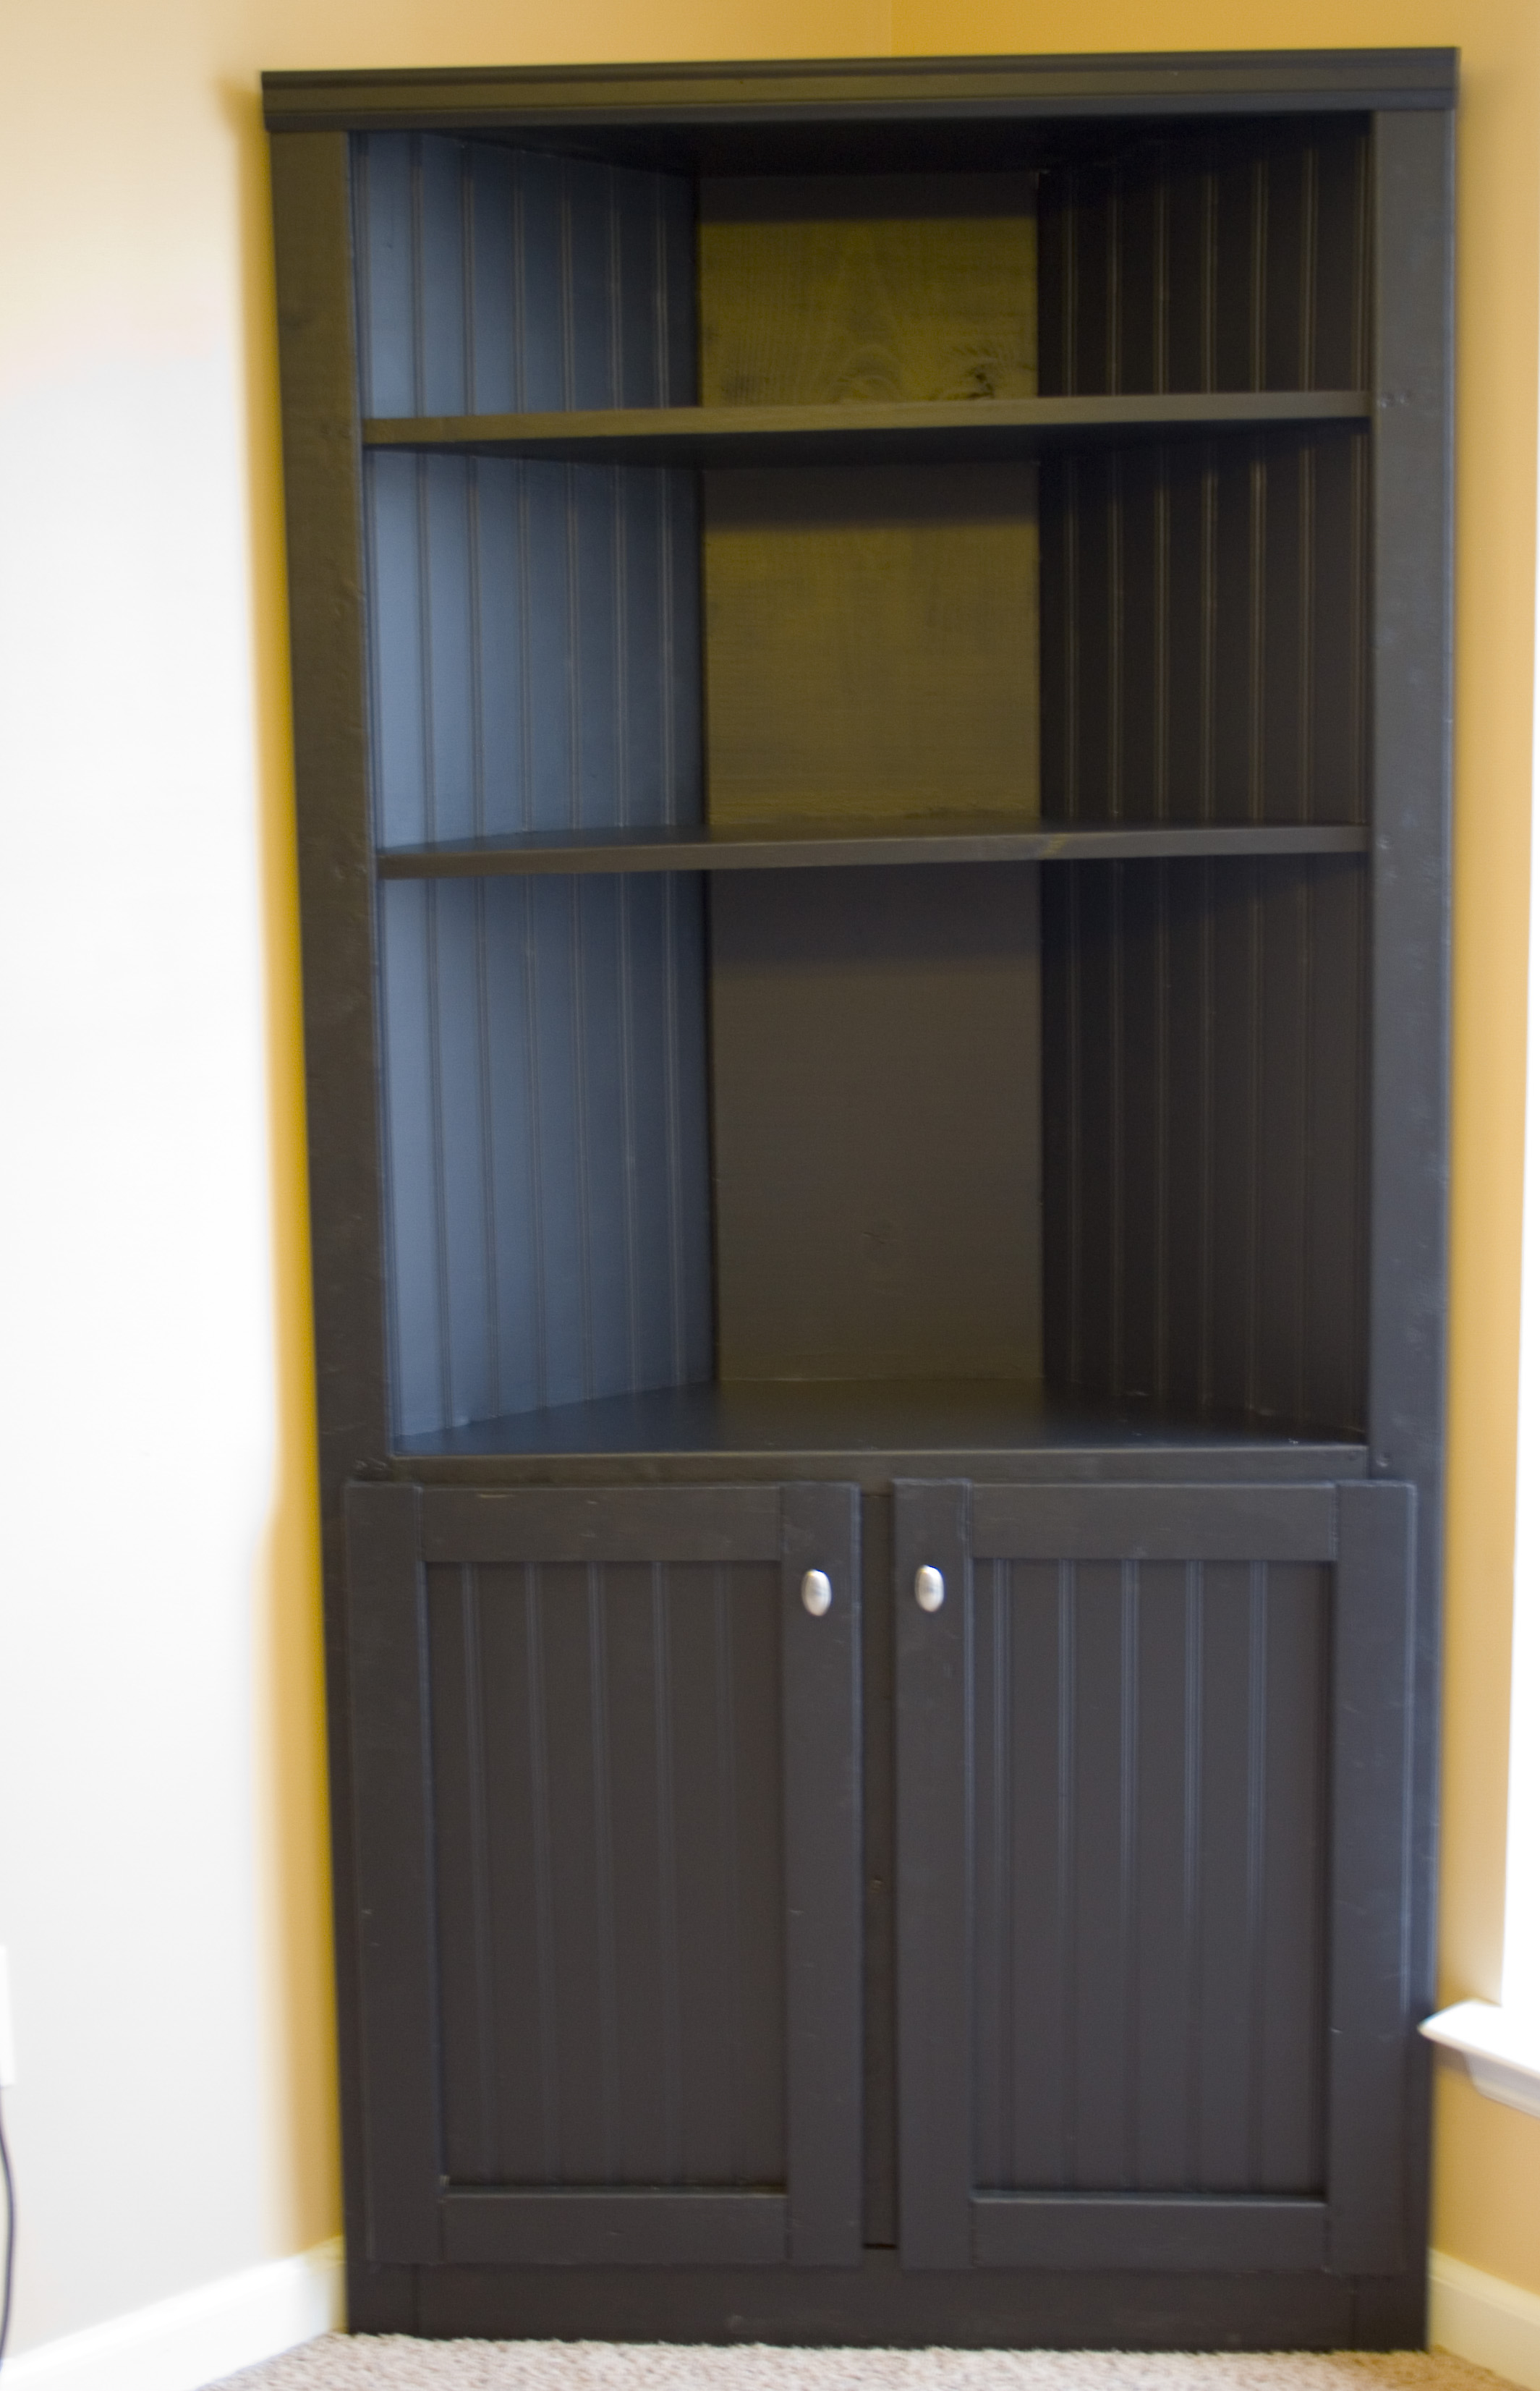 Ana White | Corner Cabinet Storage Shelf - DIY Projects